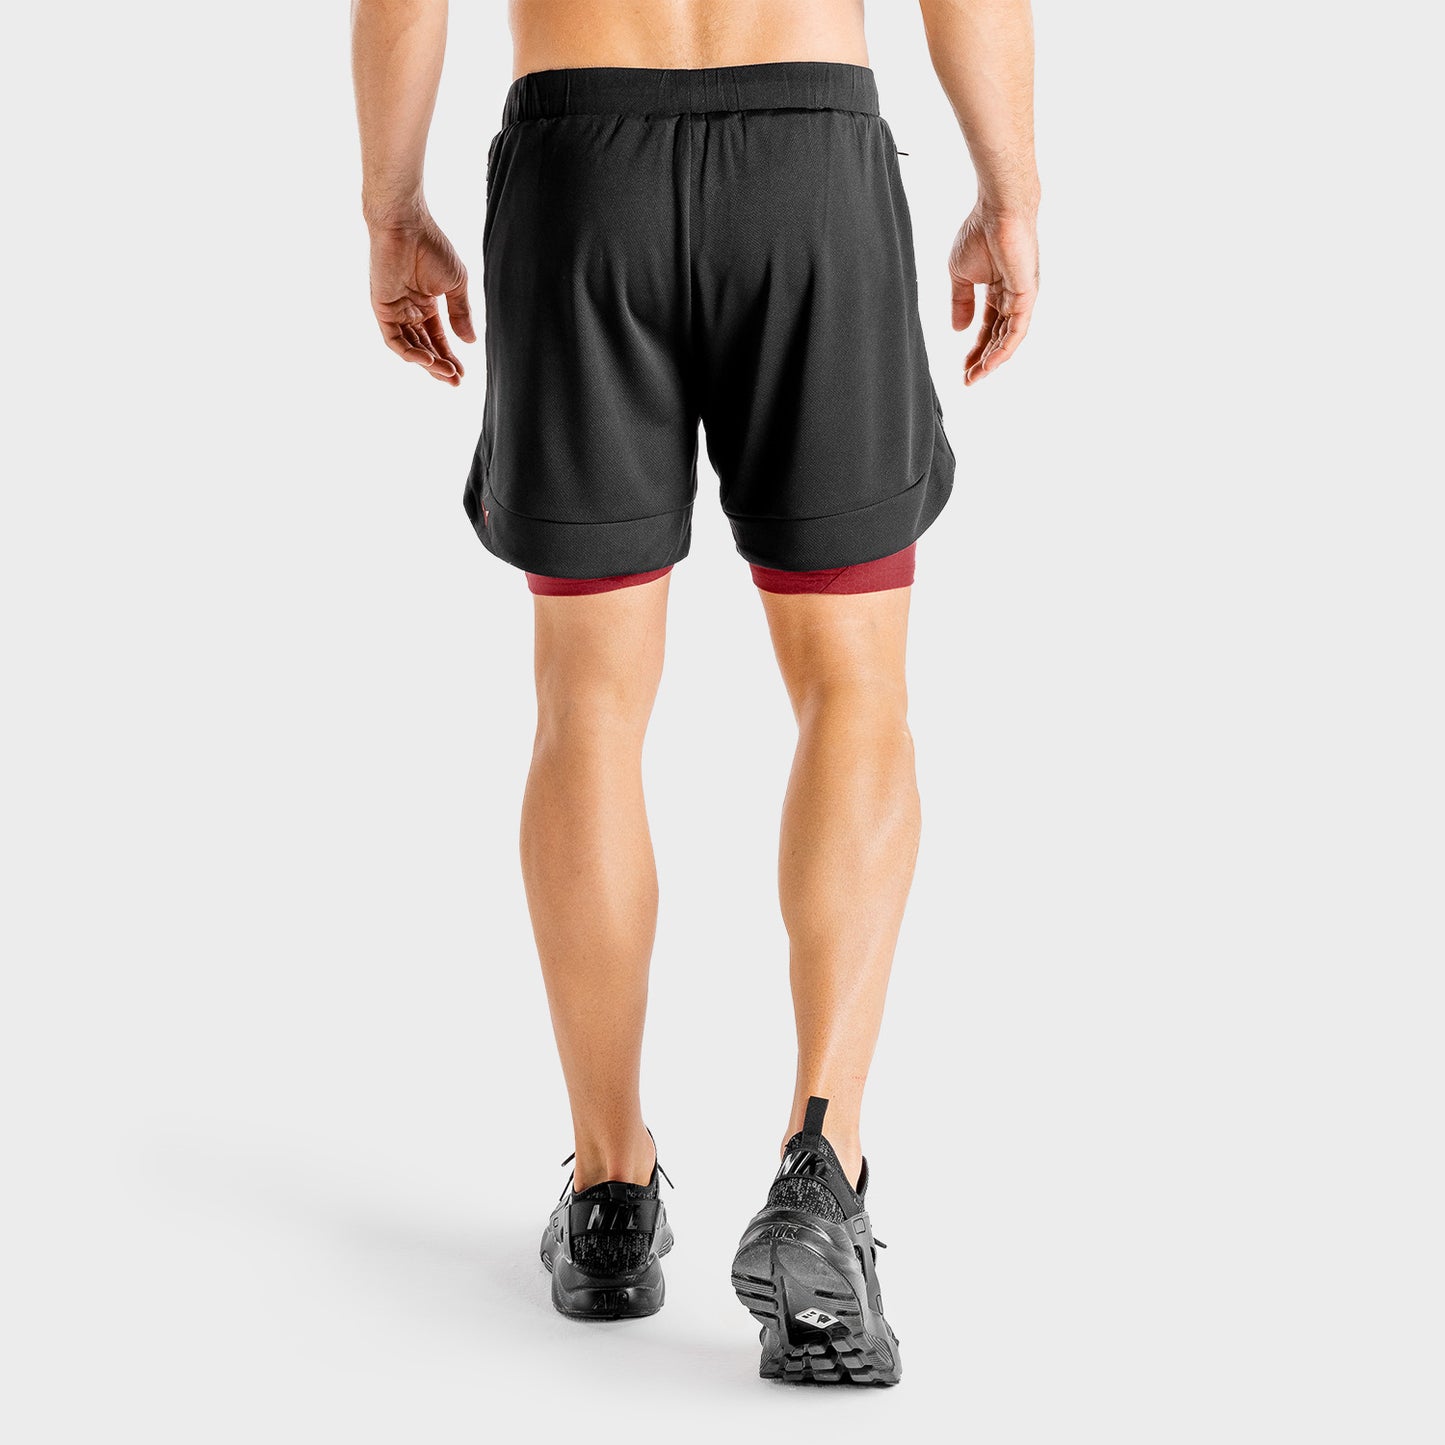 squatwolf-workout-short-for-men-superman-gym-shorts-black-gym-wear